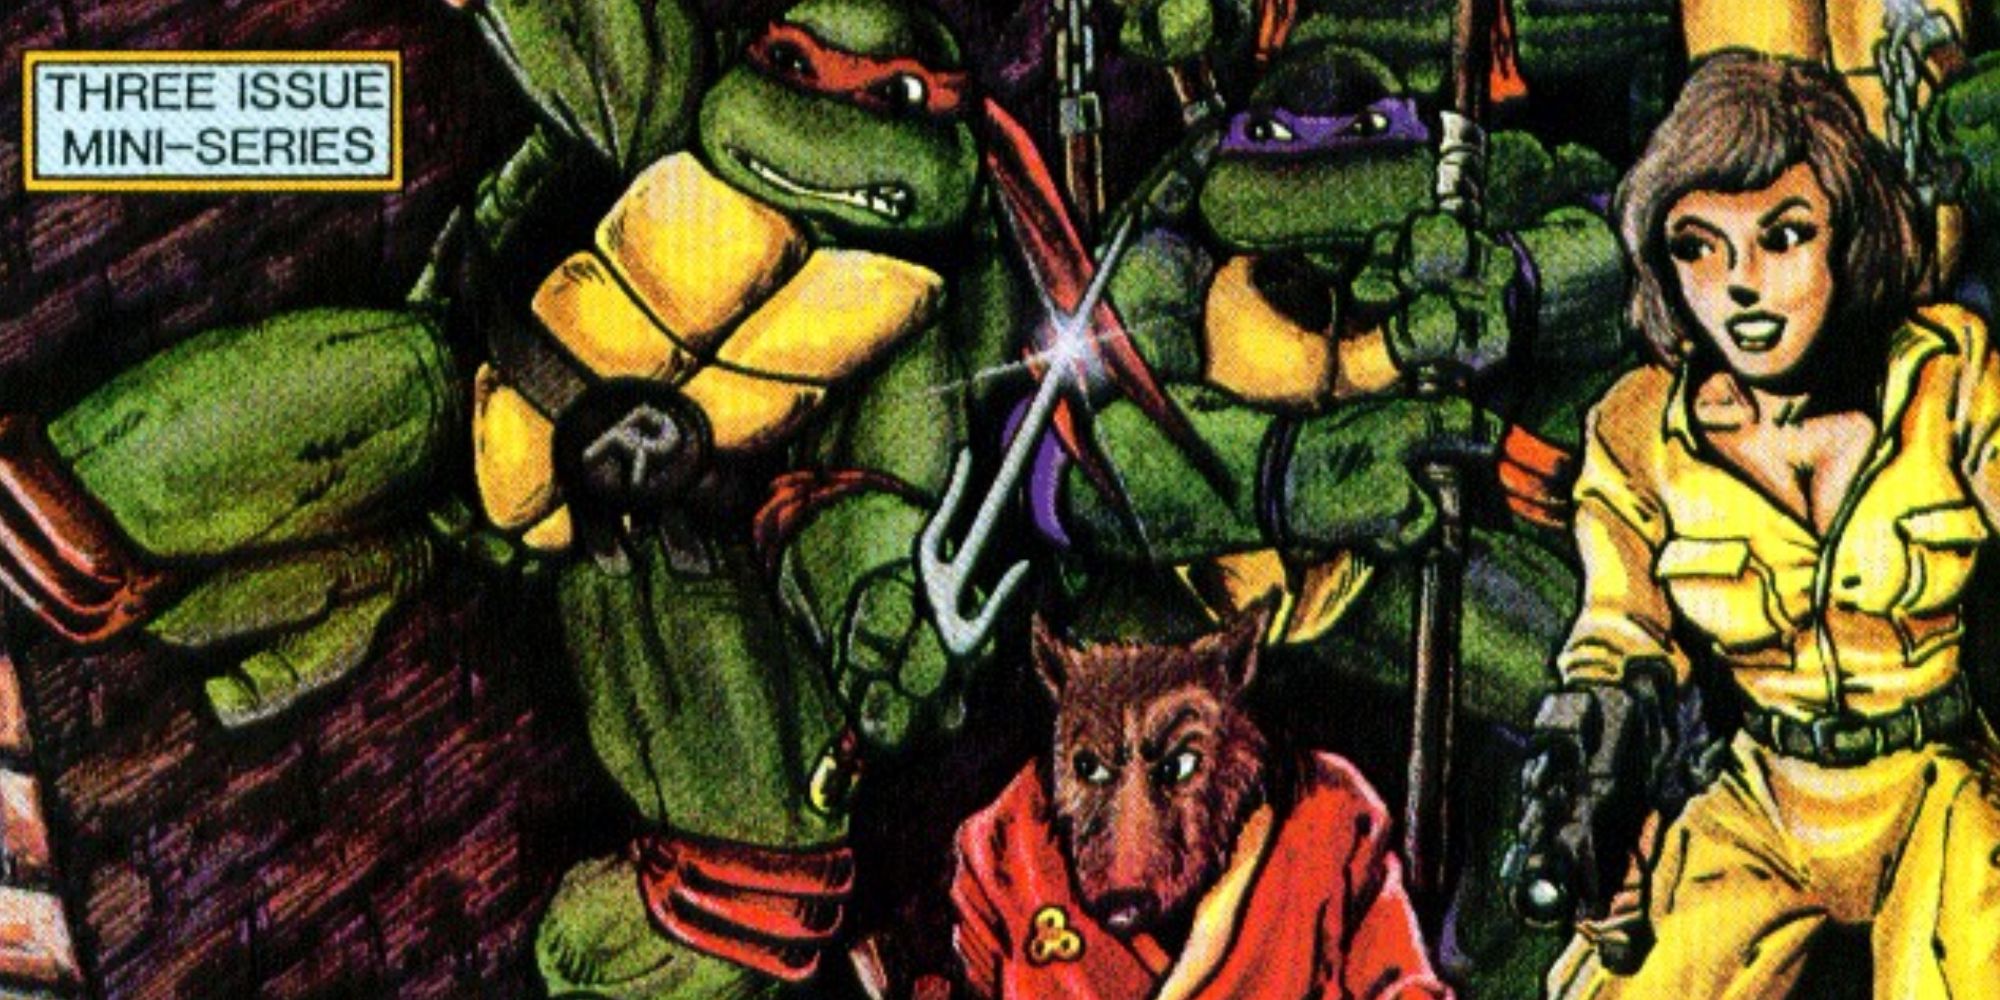 Raphael, Donatello, April O'Neill, and Splinter enter a sewer in Teenage Mutant Ninja Turtles Adventures comics.